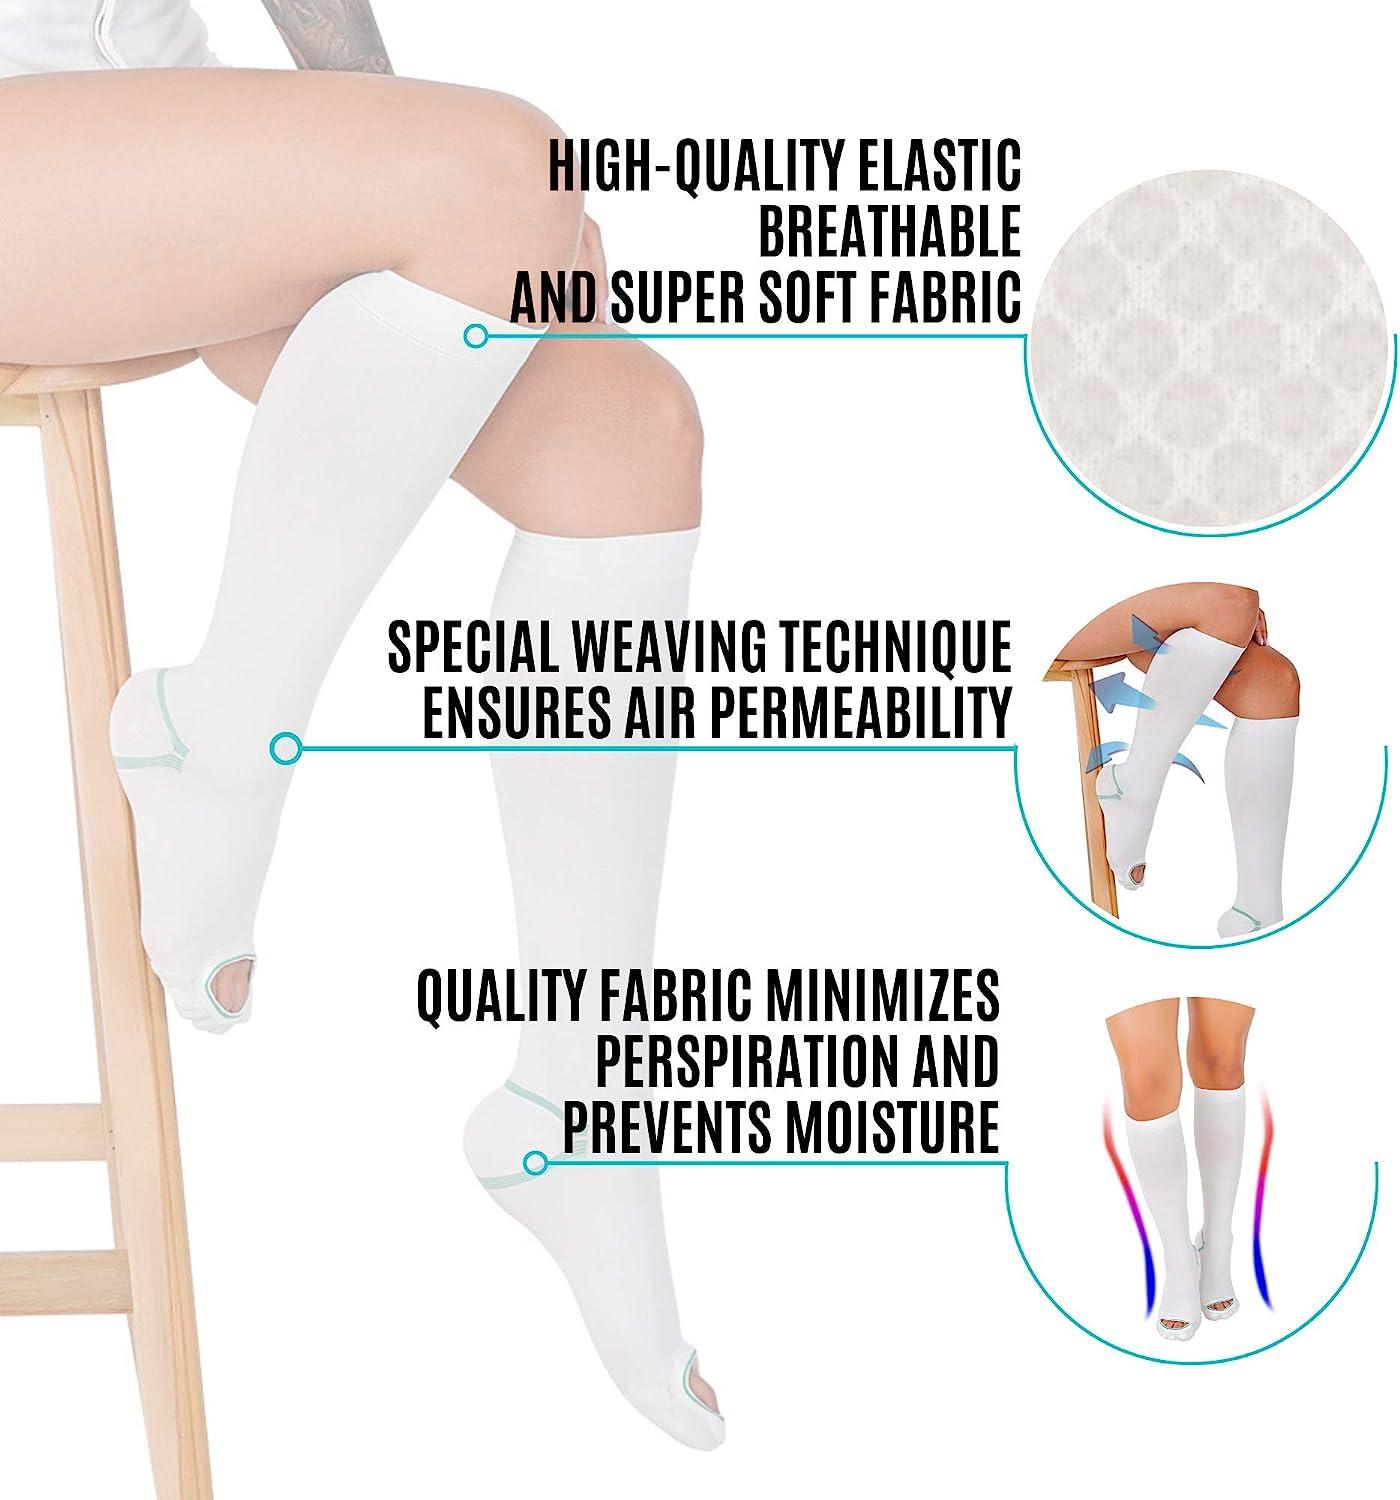 Anti Embolism Compression Stockings, Knee High Unisex Ted Hose Socks 15-20  mmHg Moderate Level X-Large (1 Pair)